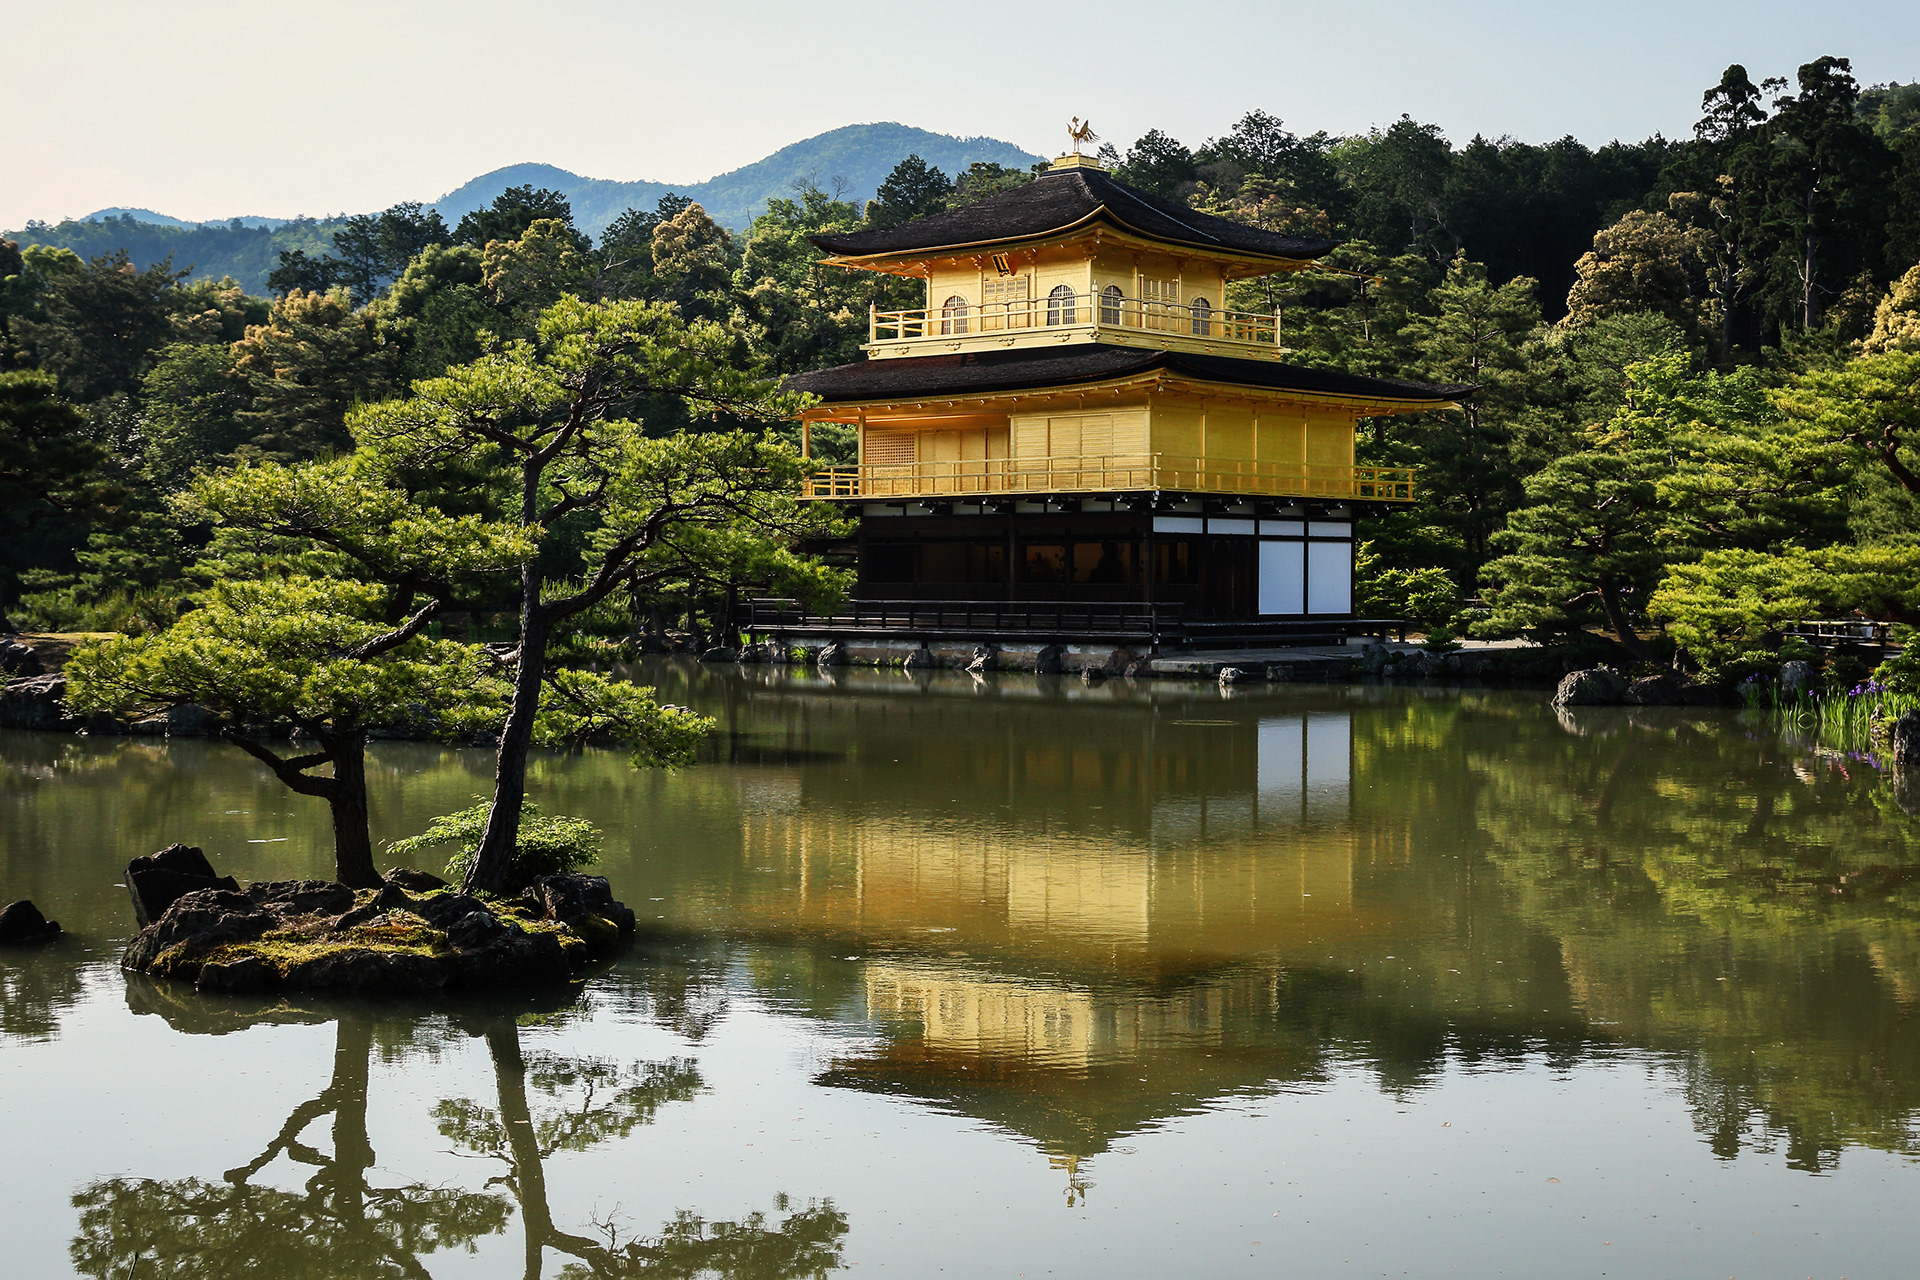 Alan Jones Photography - Landscapes of Japan